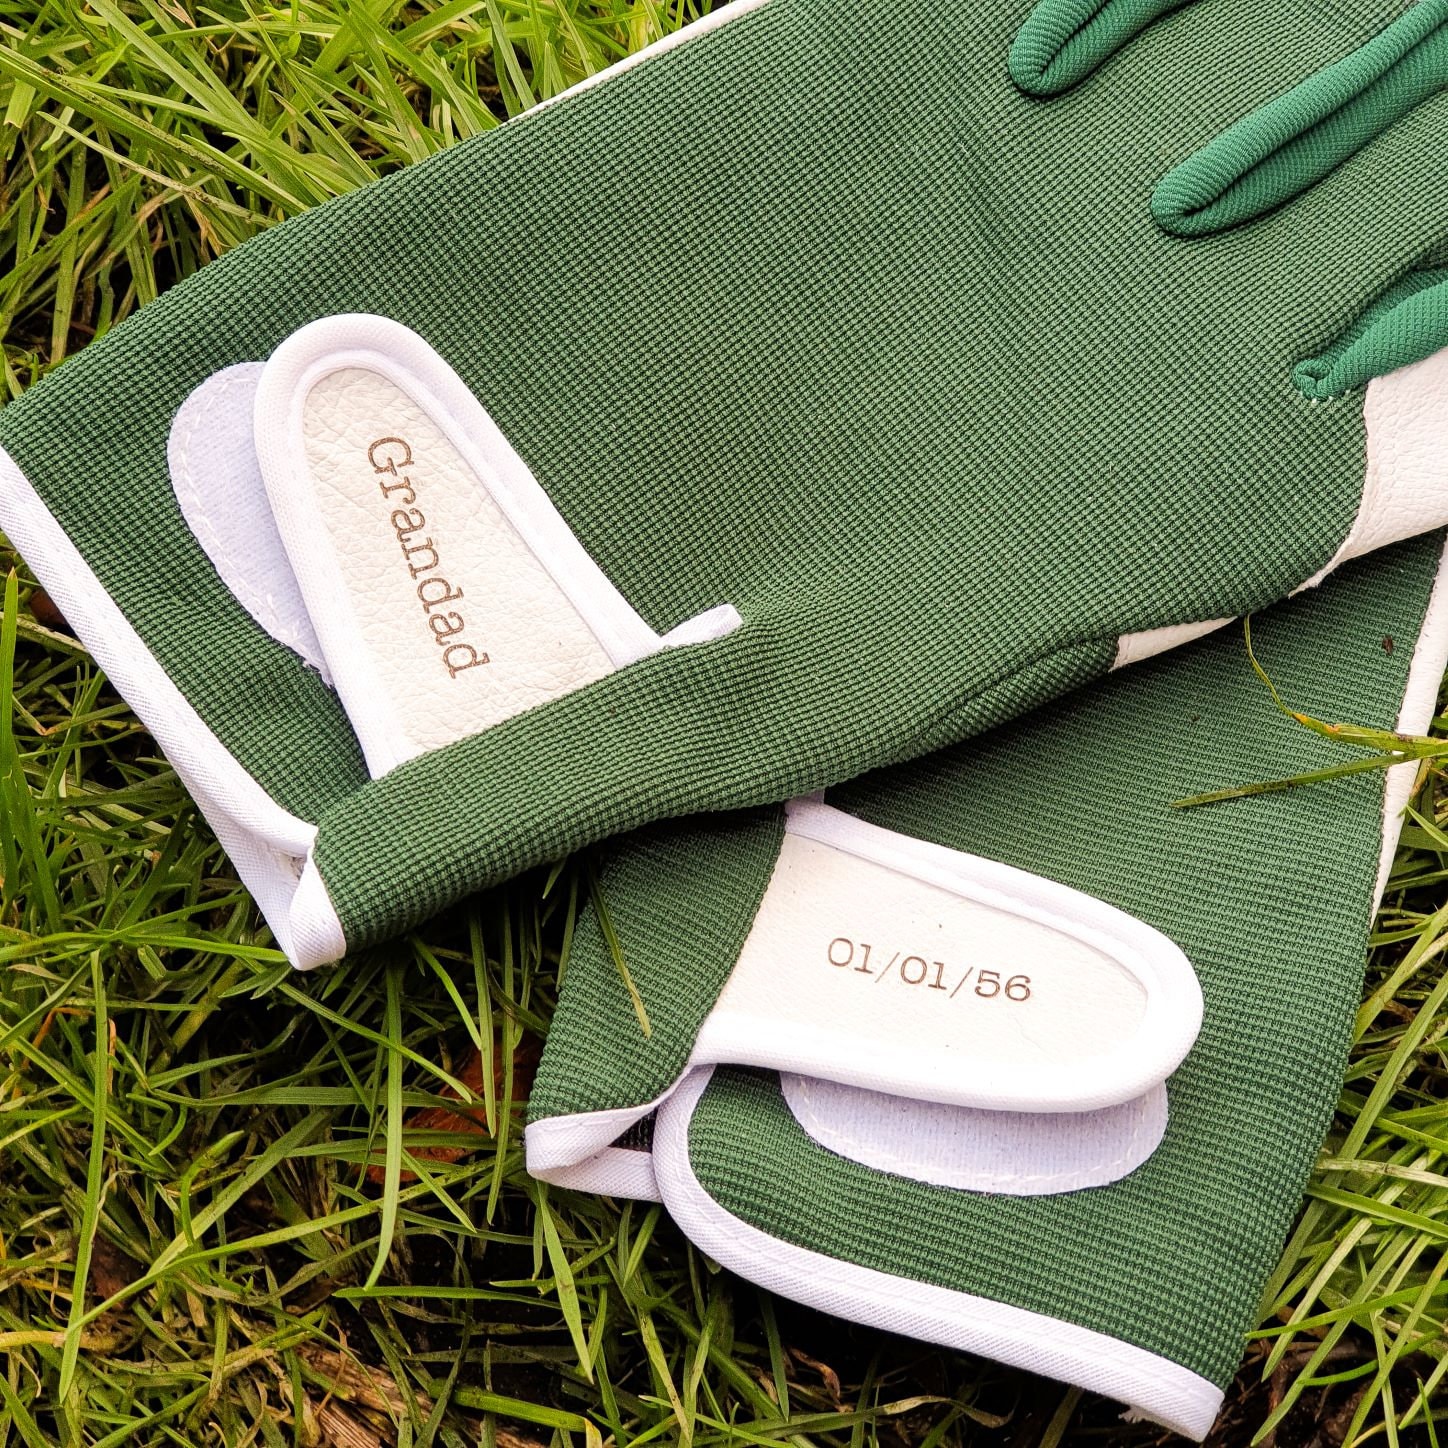 Garden Gift Gardening Gloves Personalised Leather Gardening Gloves in 3 Colours Personalized Gift Home & Living Outdoor & Gardening Garden Gloves & Aprons 